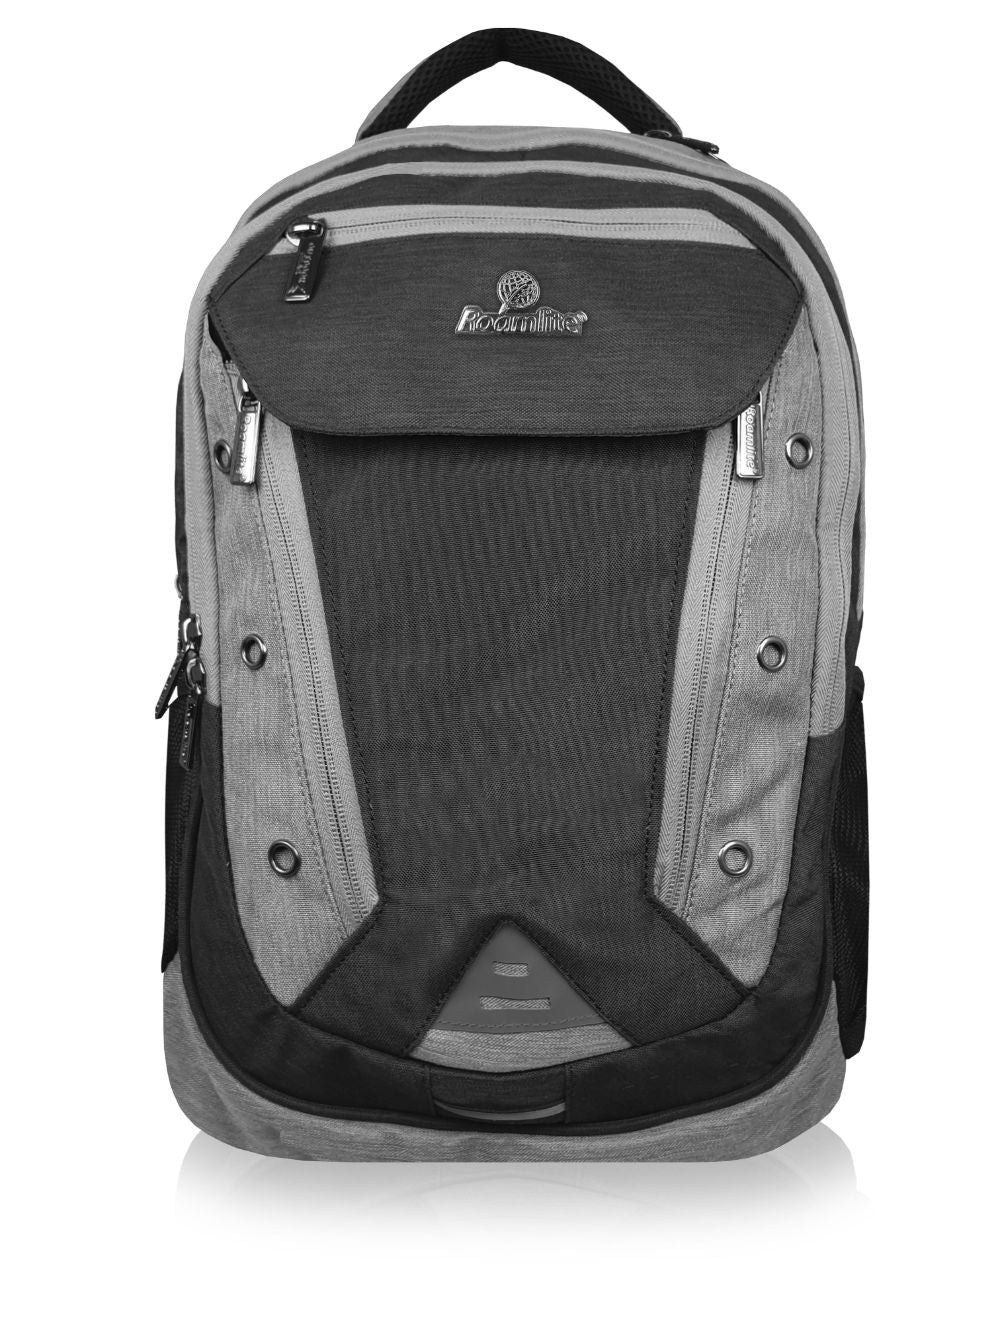 Roamlite School Backpack Grey Black Jacquard RL912 front